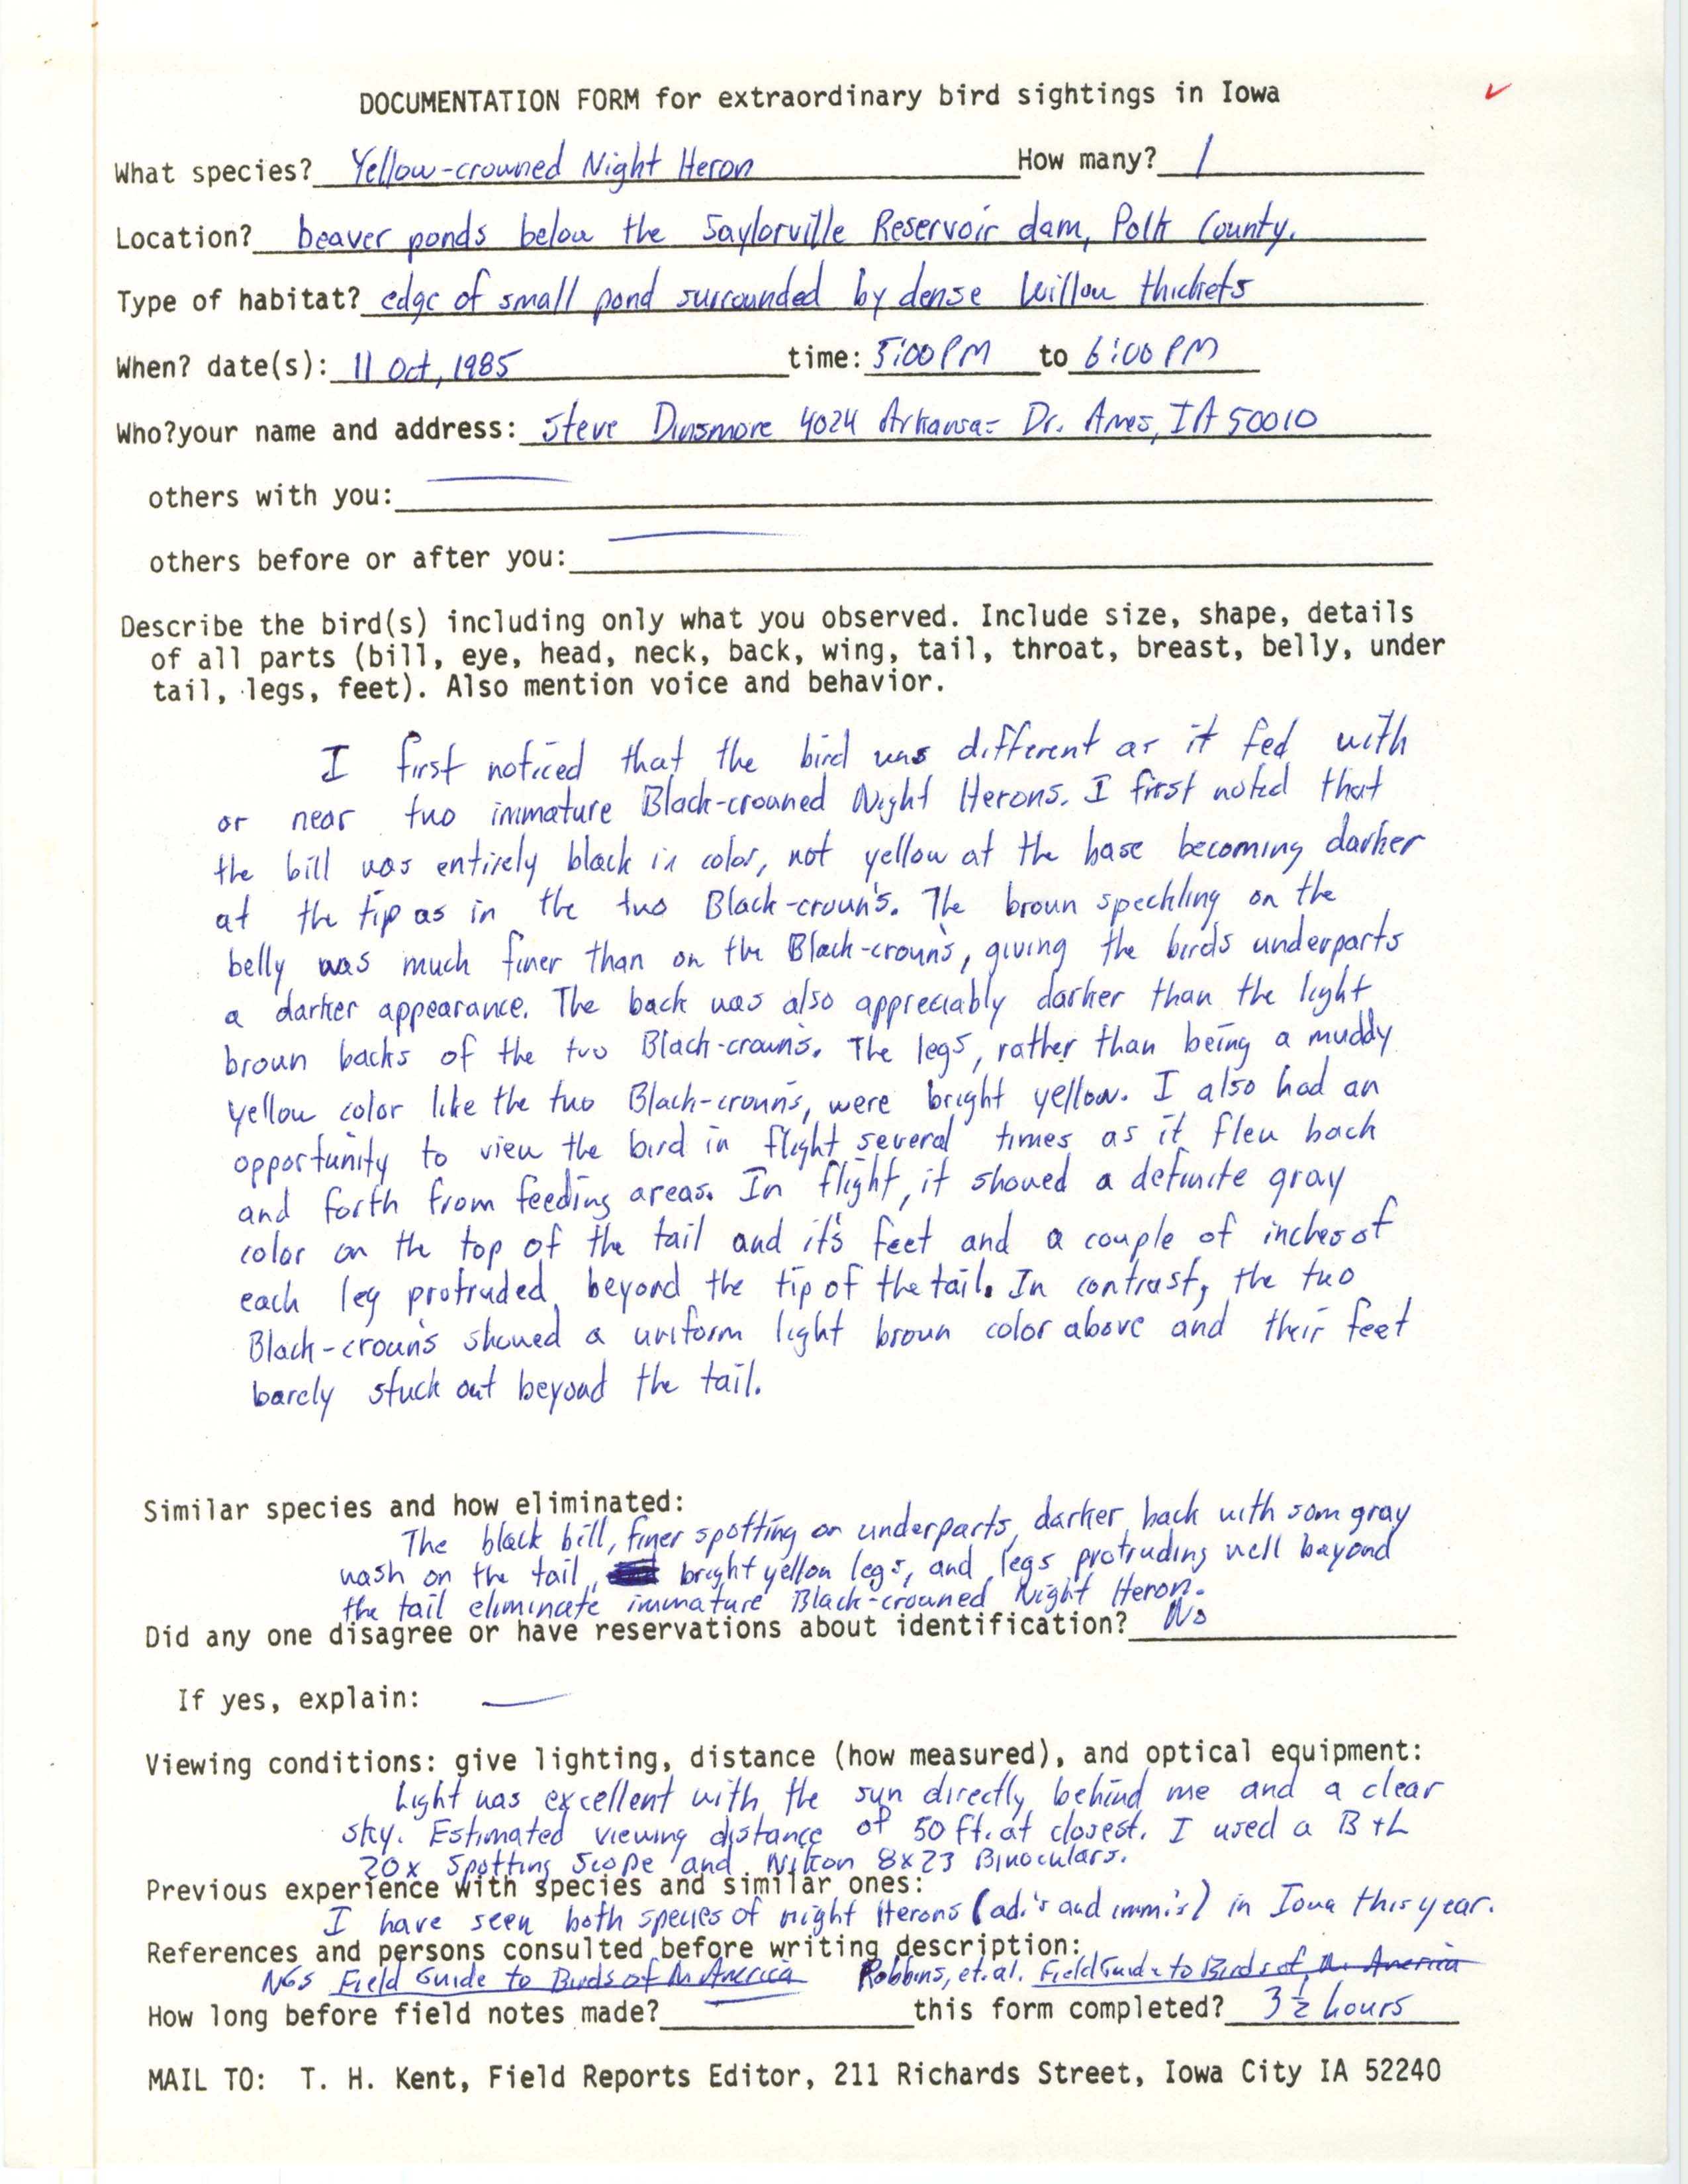 Rare bird documentation form for Yellow-crowned Night Heron at Saylorville Reservoir dam, 1985